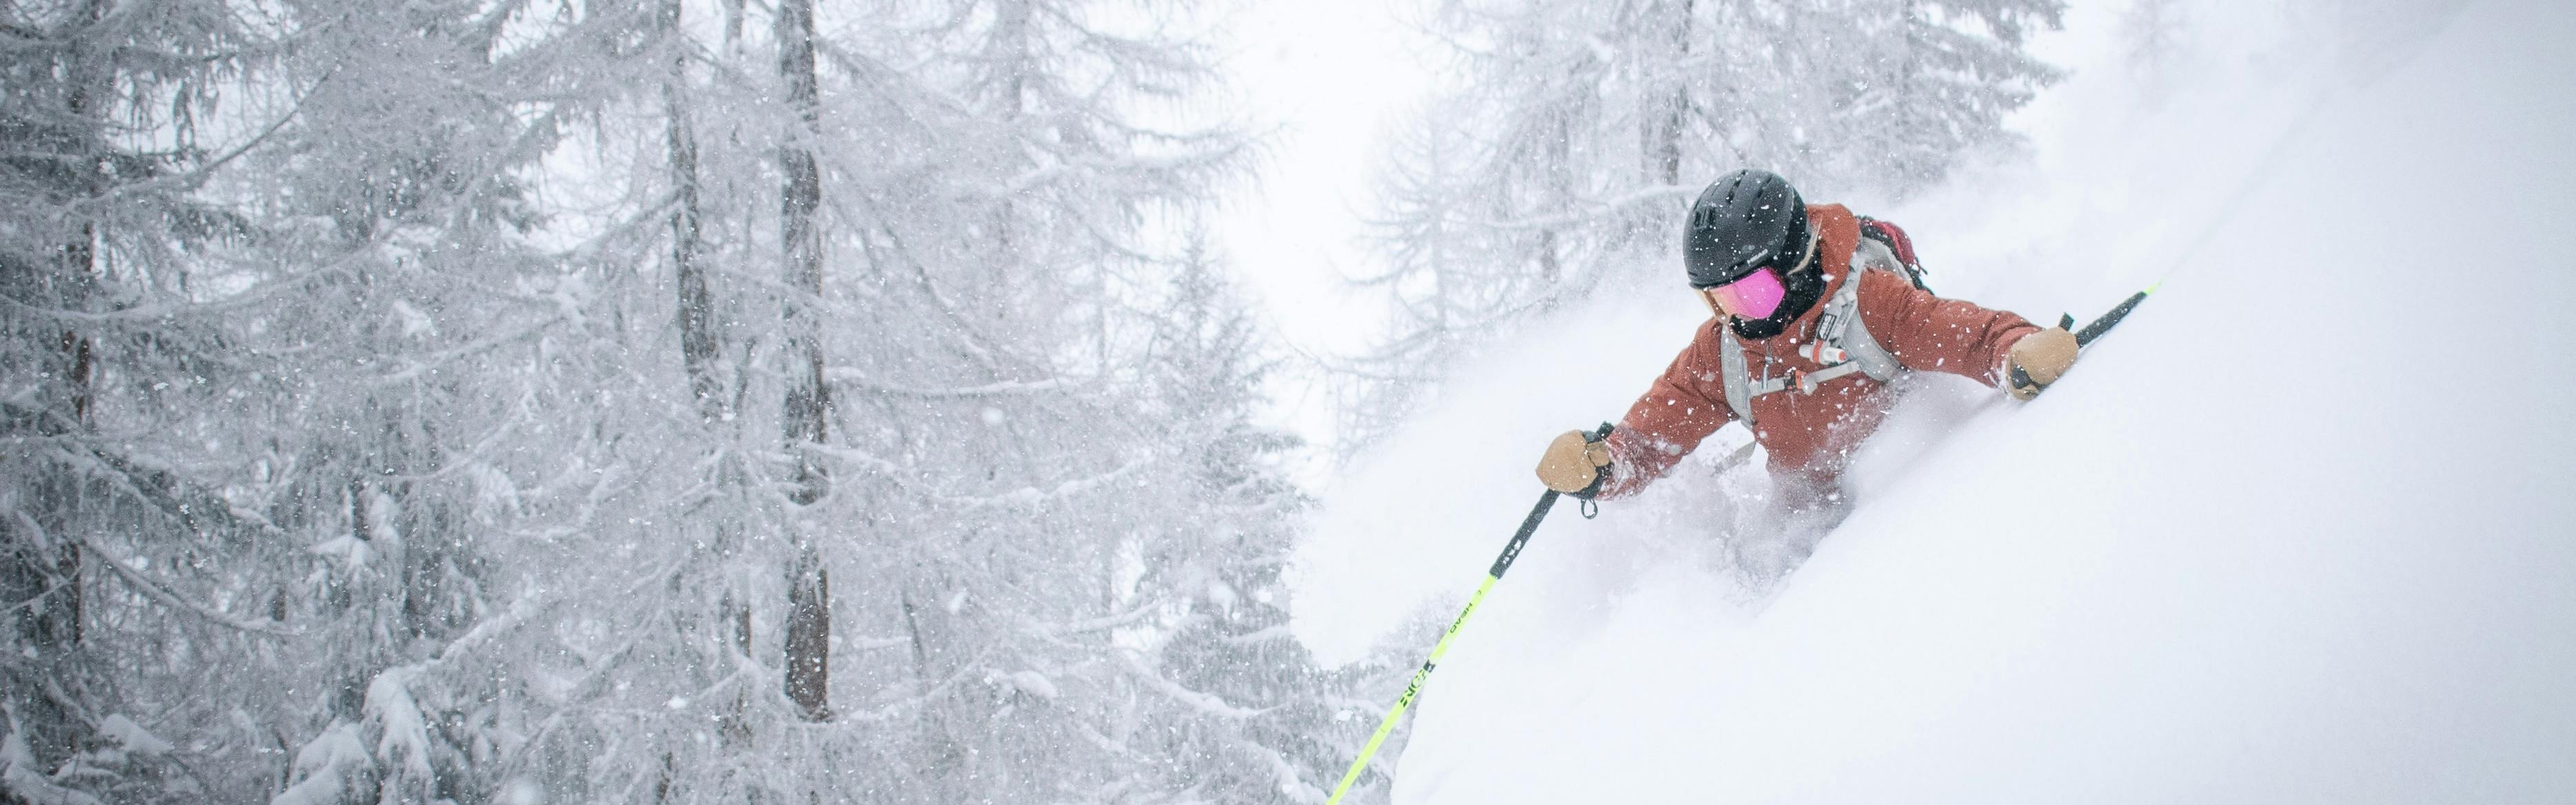 A skier navigates through waist-deep powder